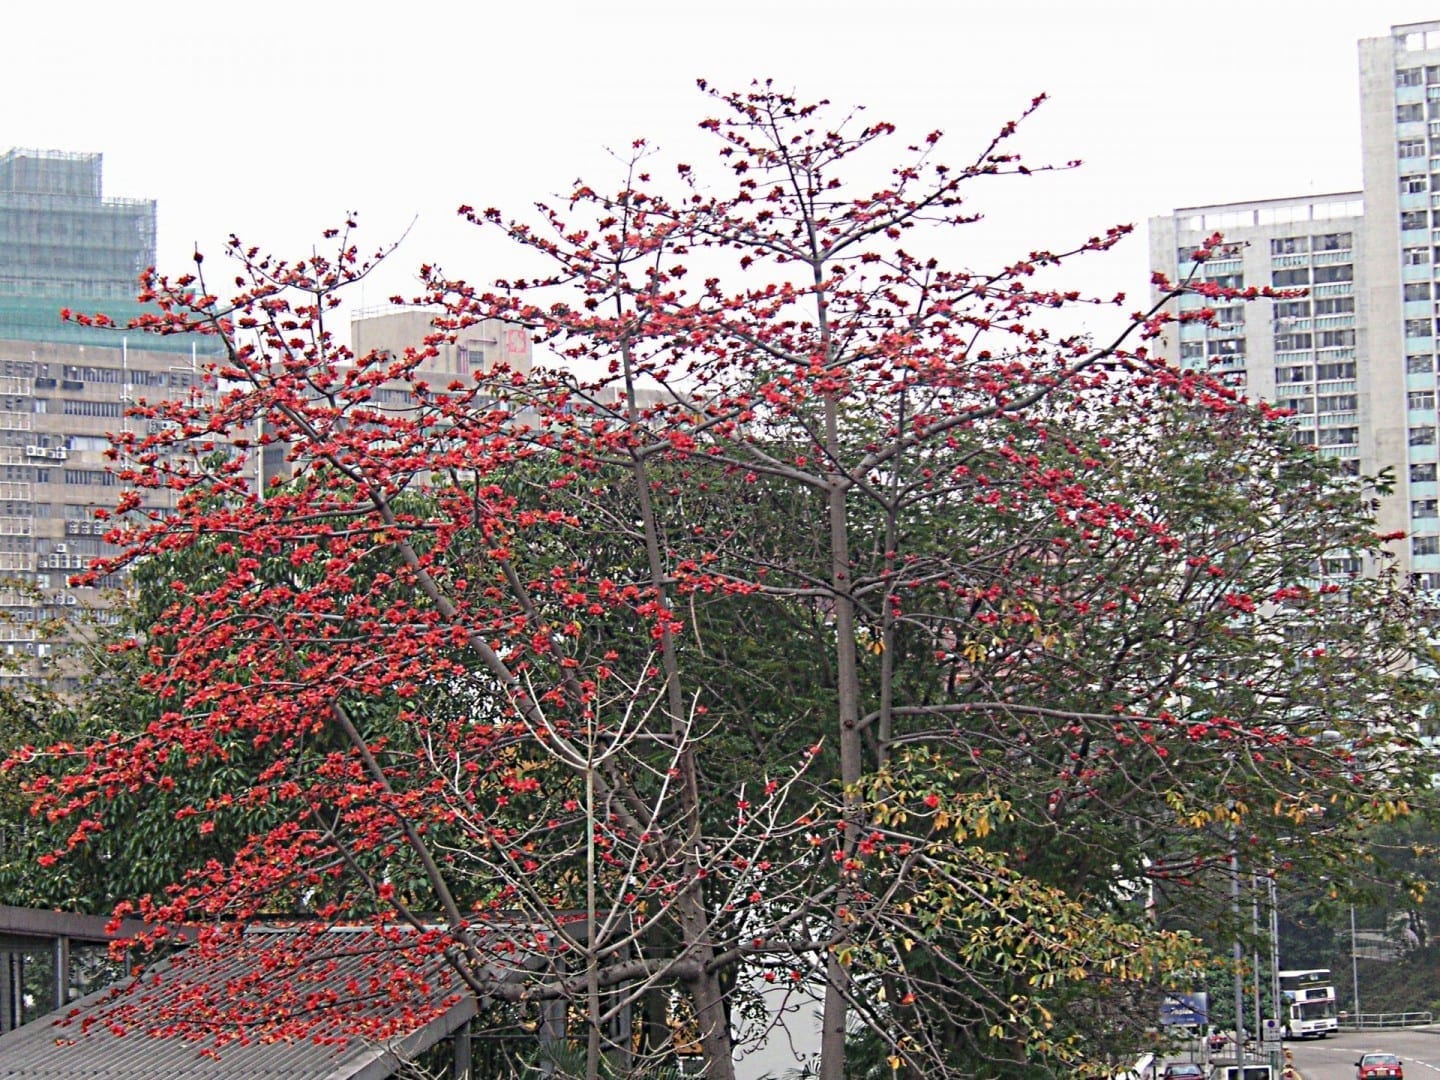 Un árbol de algodón, panzhihua en chino Panzhihua China